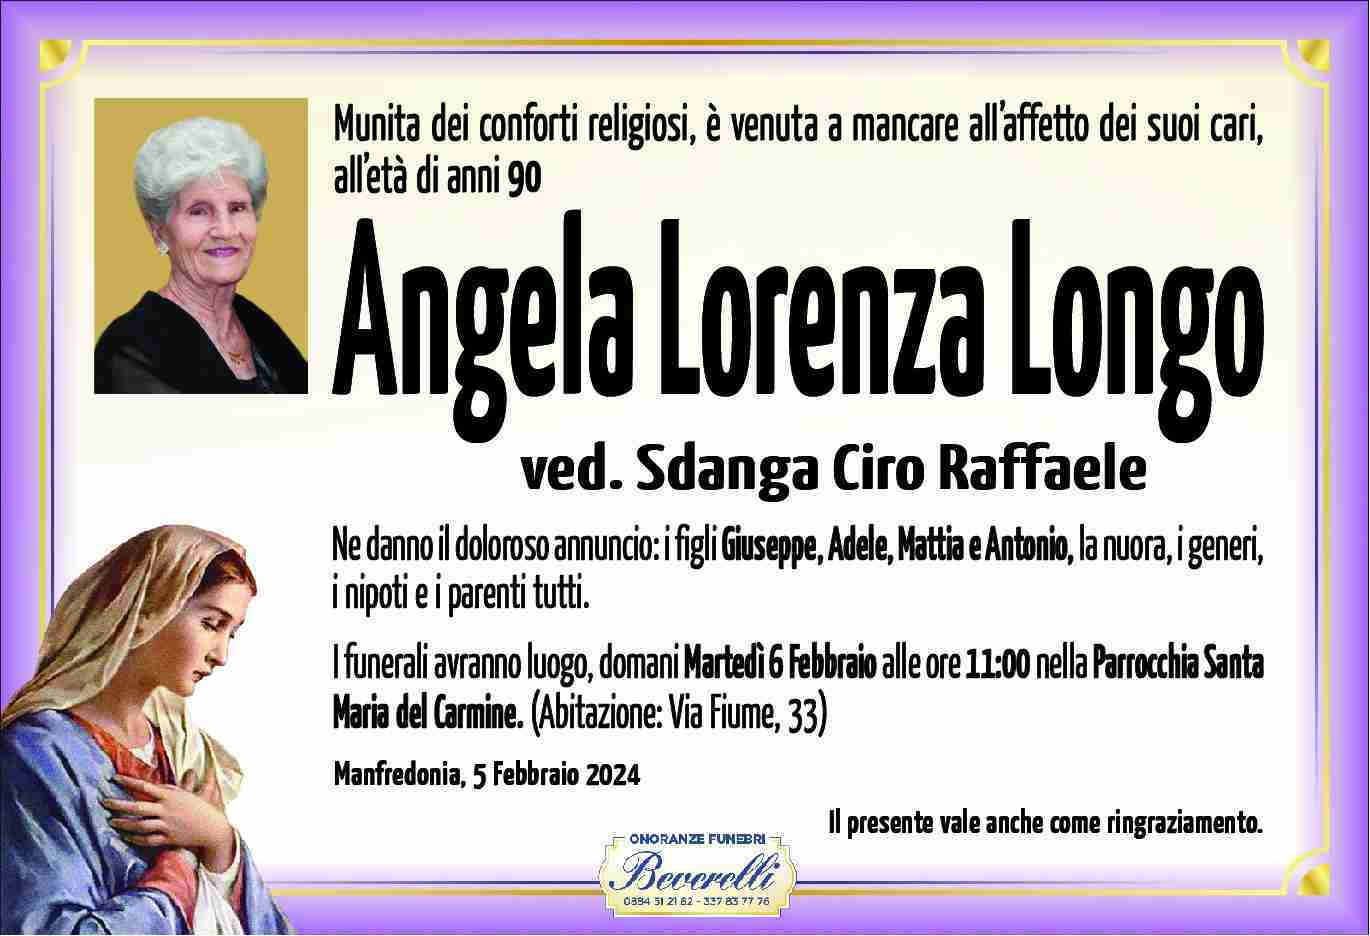 Angela Lorenza Longo